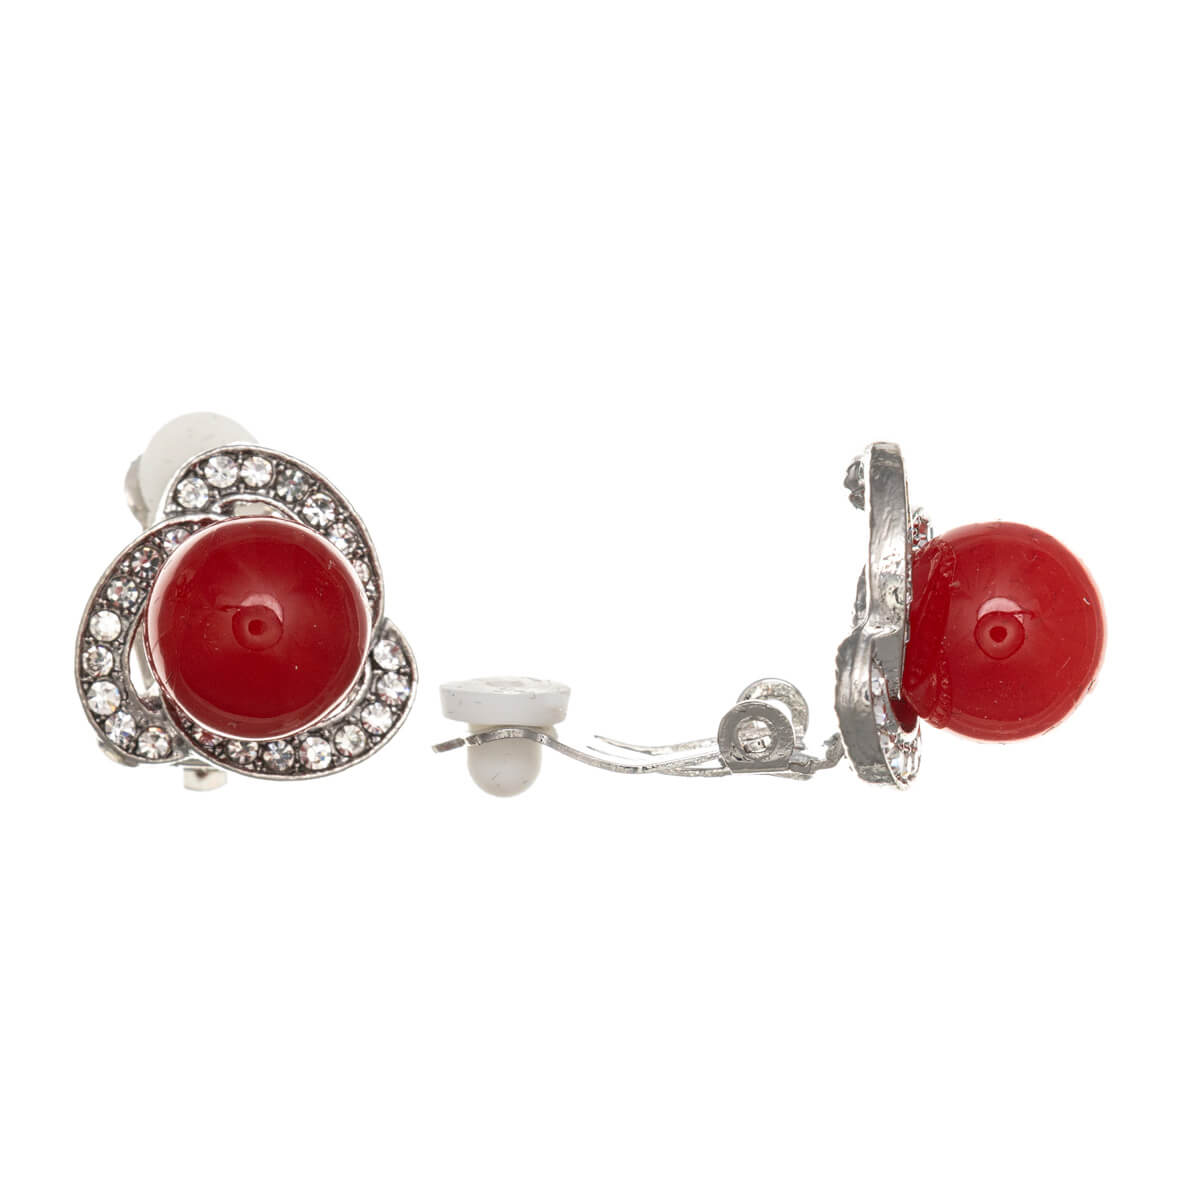 Sparkling pearl clip earrings